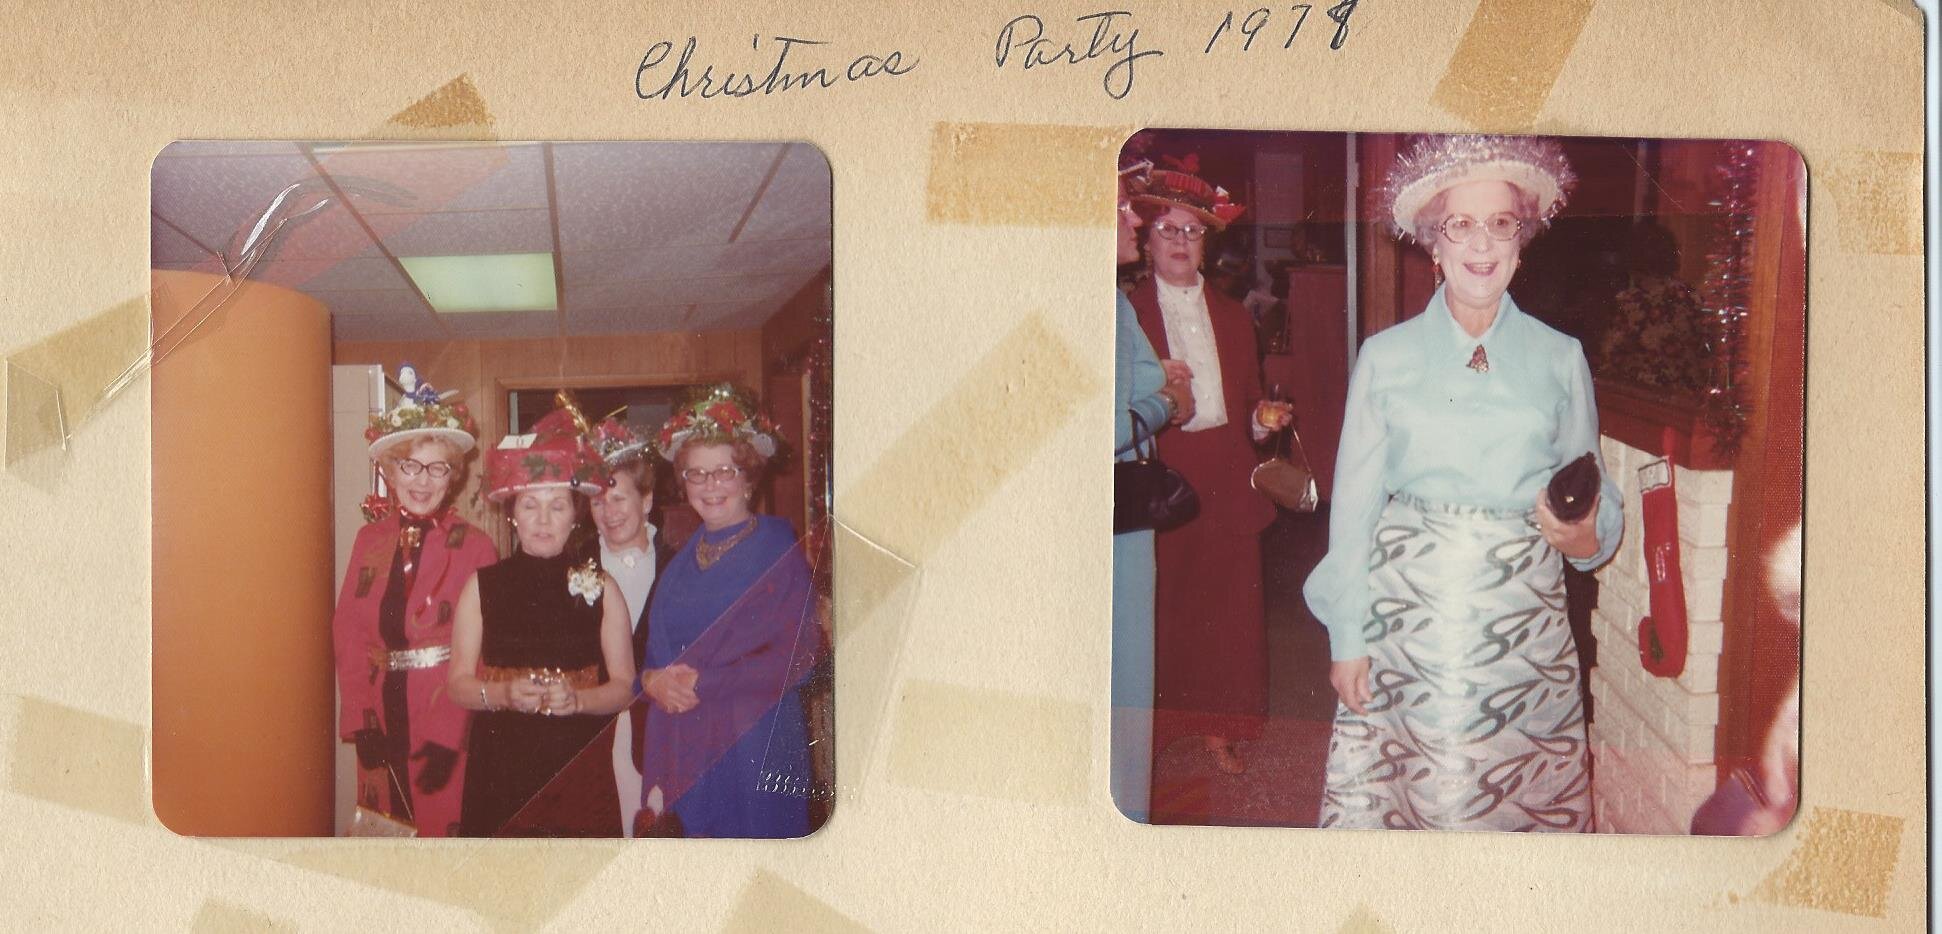 Christmas Party 1979.jpg